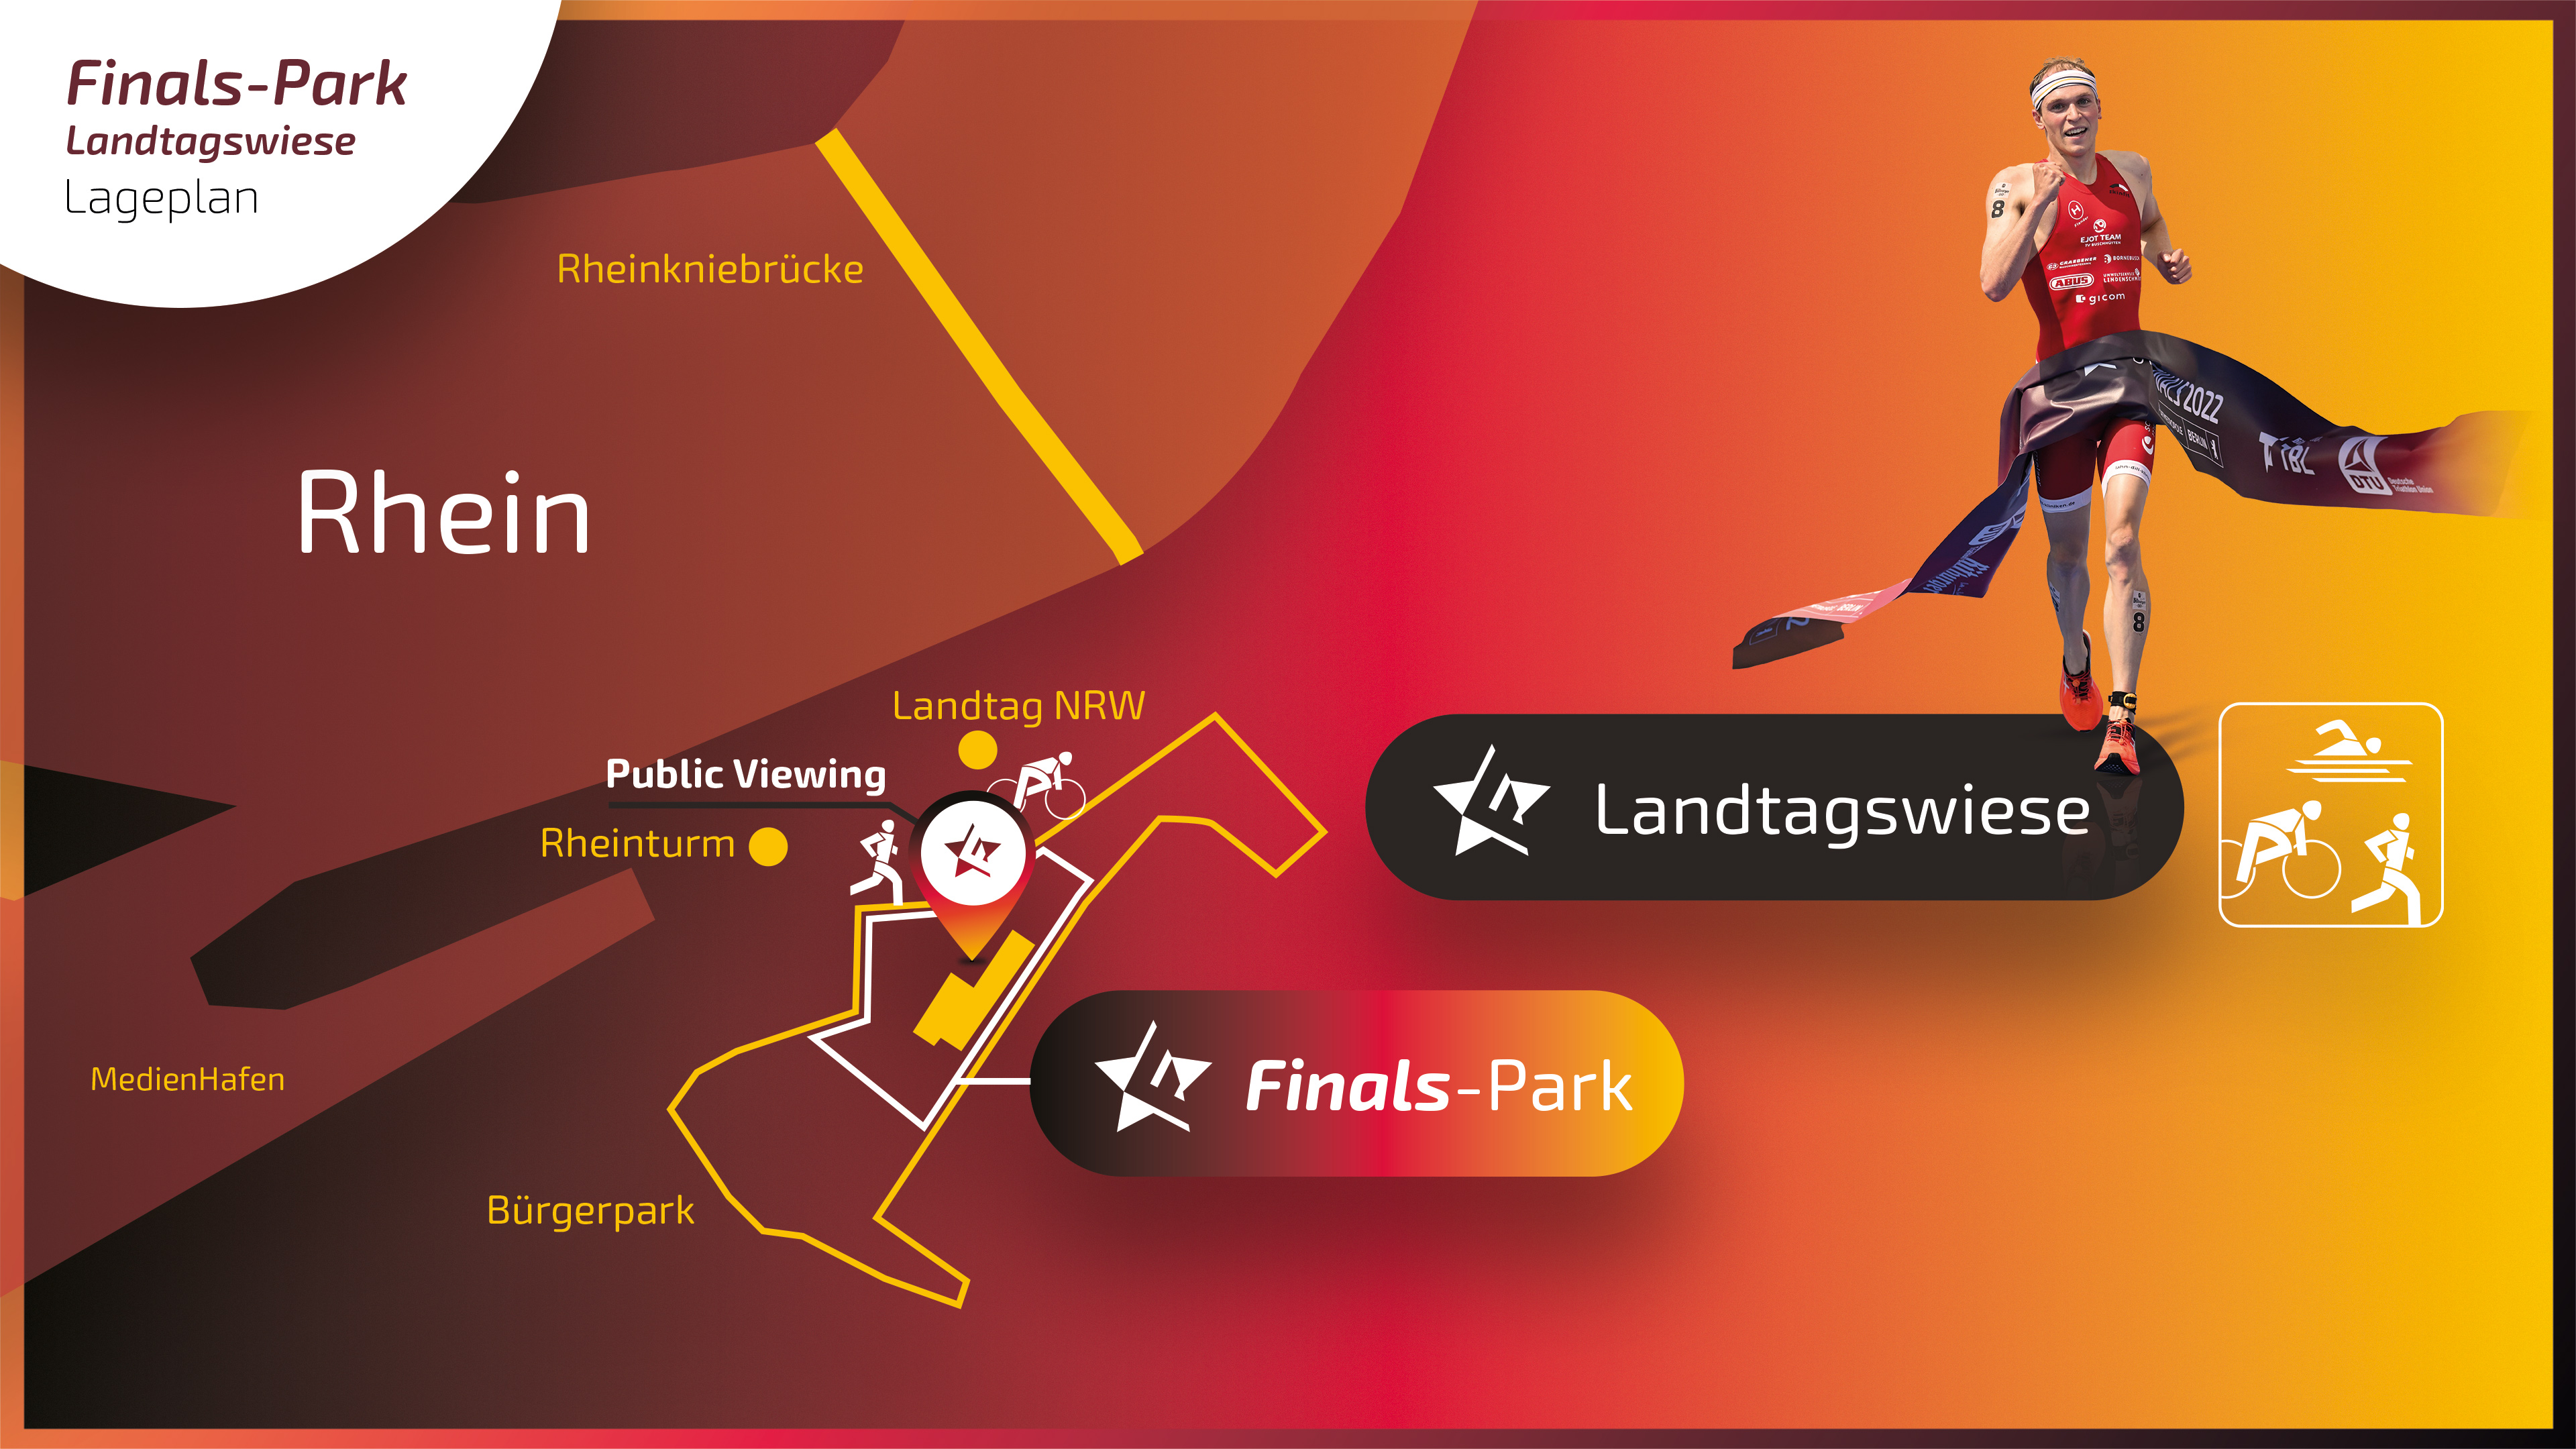 Lageplan Landtagswiese Finals-Park